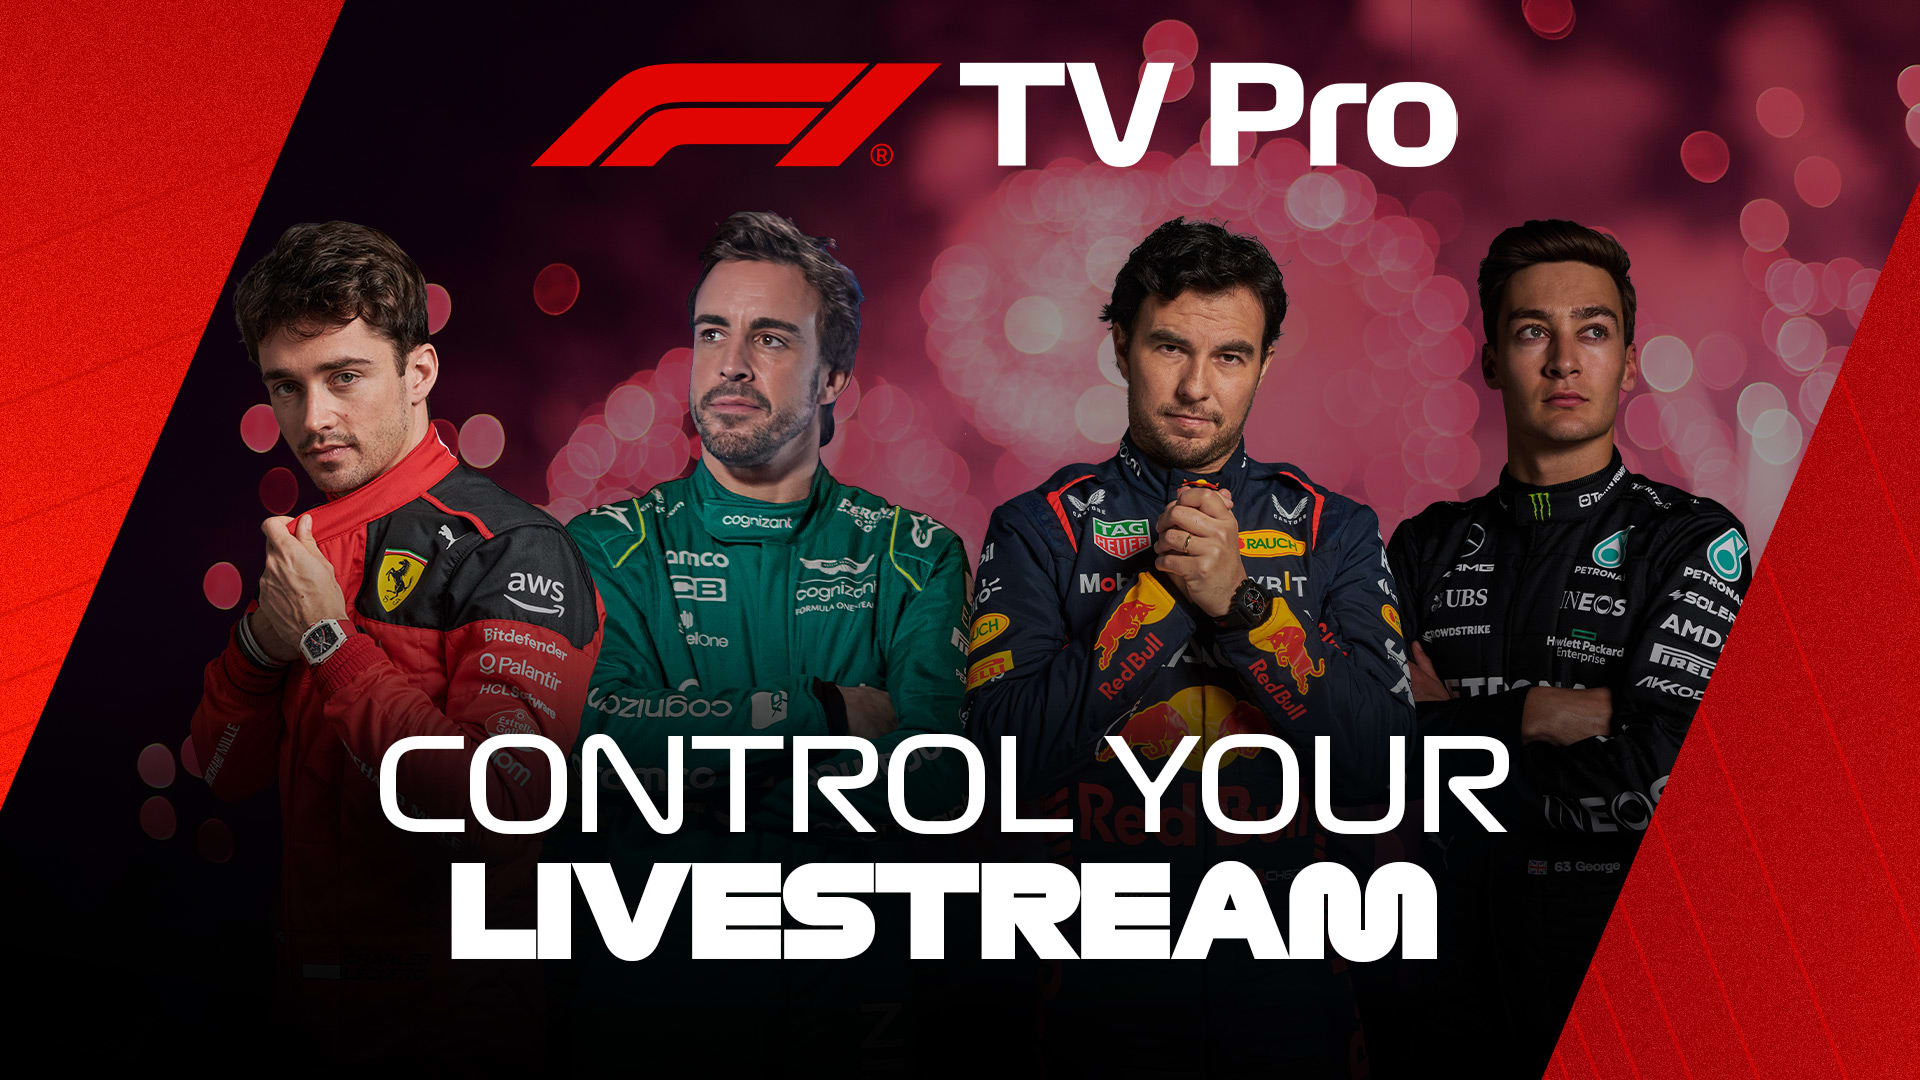 How to stream the 2023 Spanish Grand Prix on F1 TV Pro Formula 1®